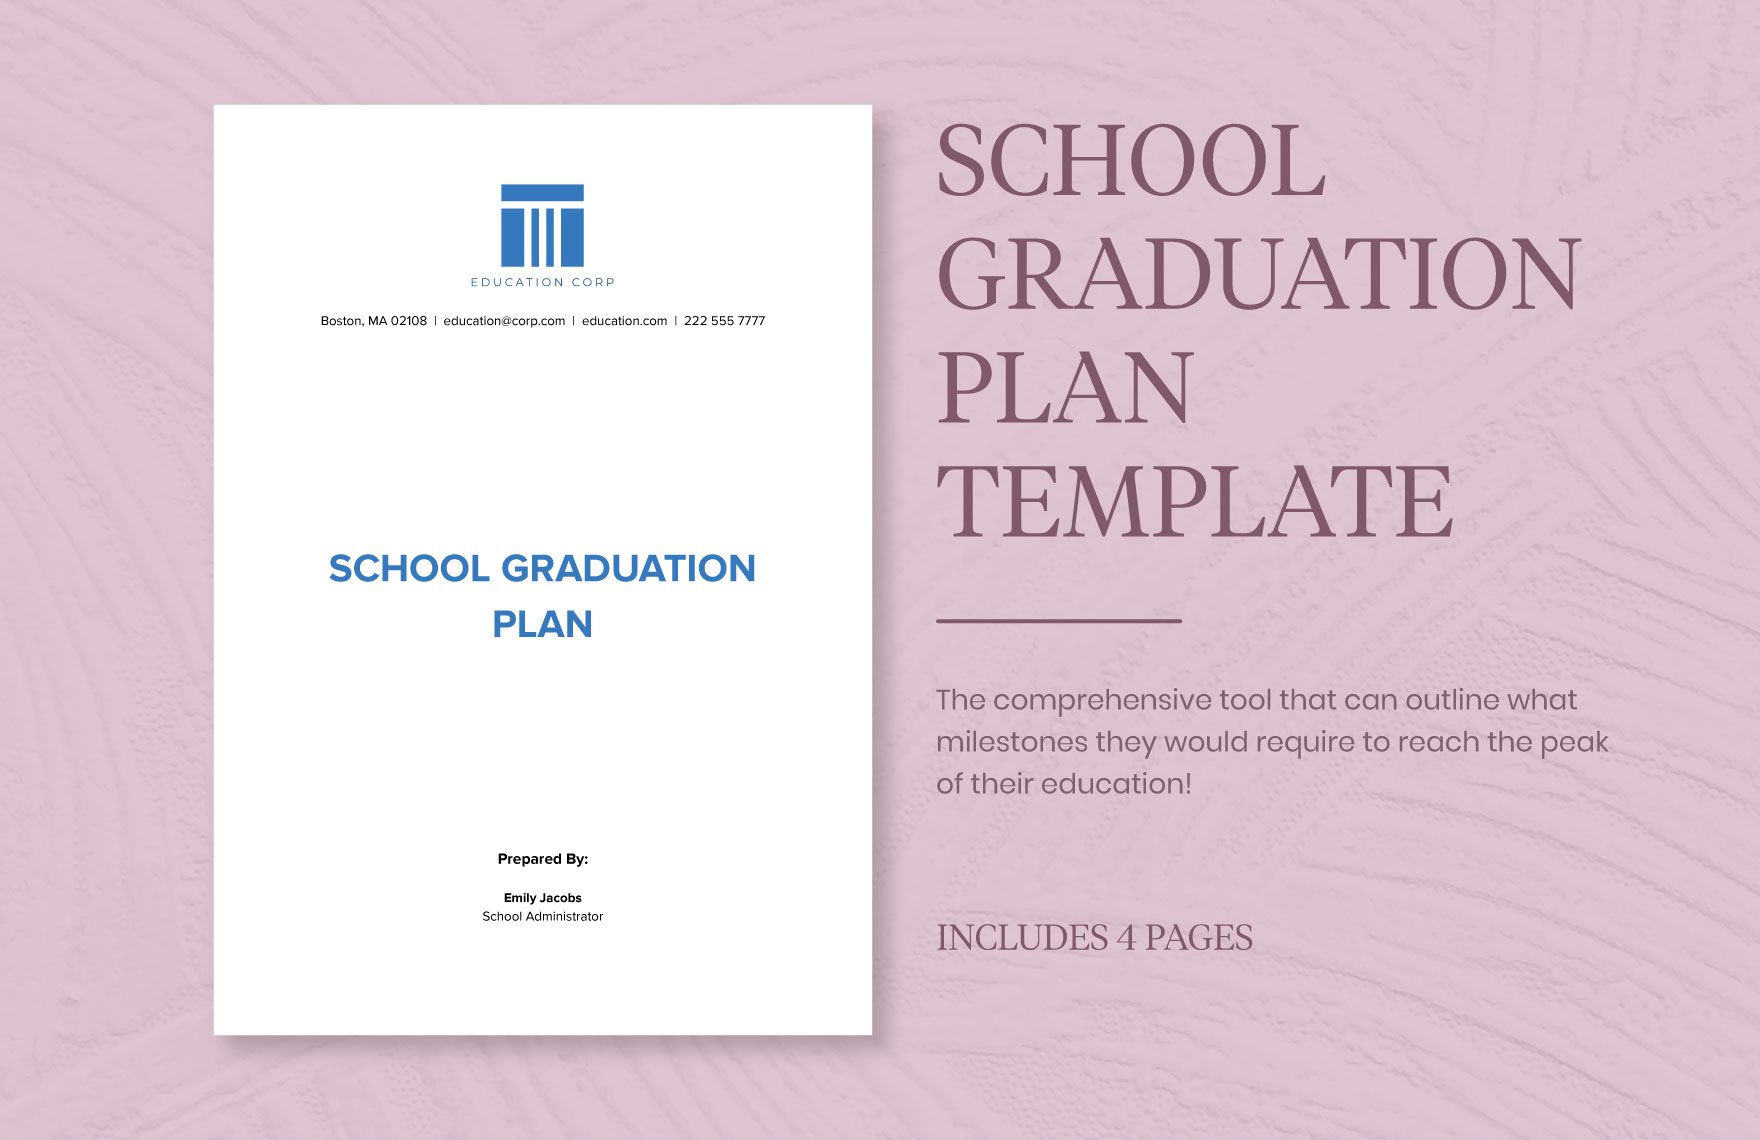 School Graduation Plan Template